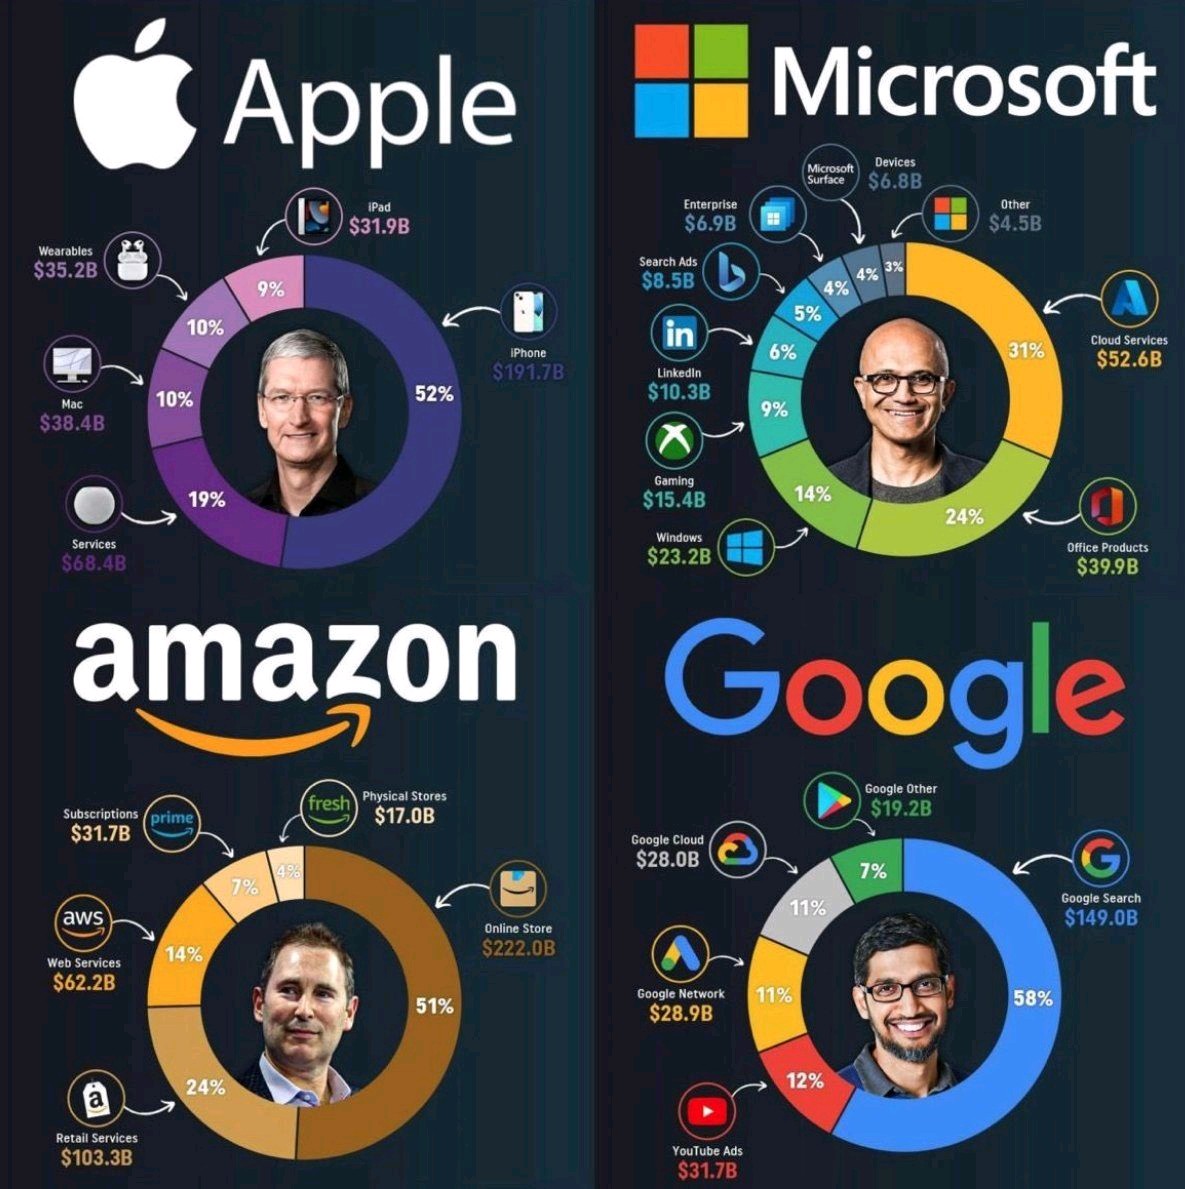 Microsoft has the most diverse portfolio